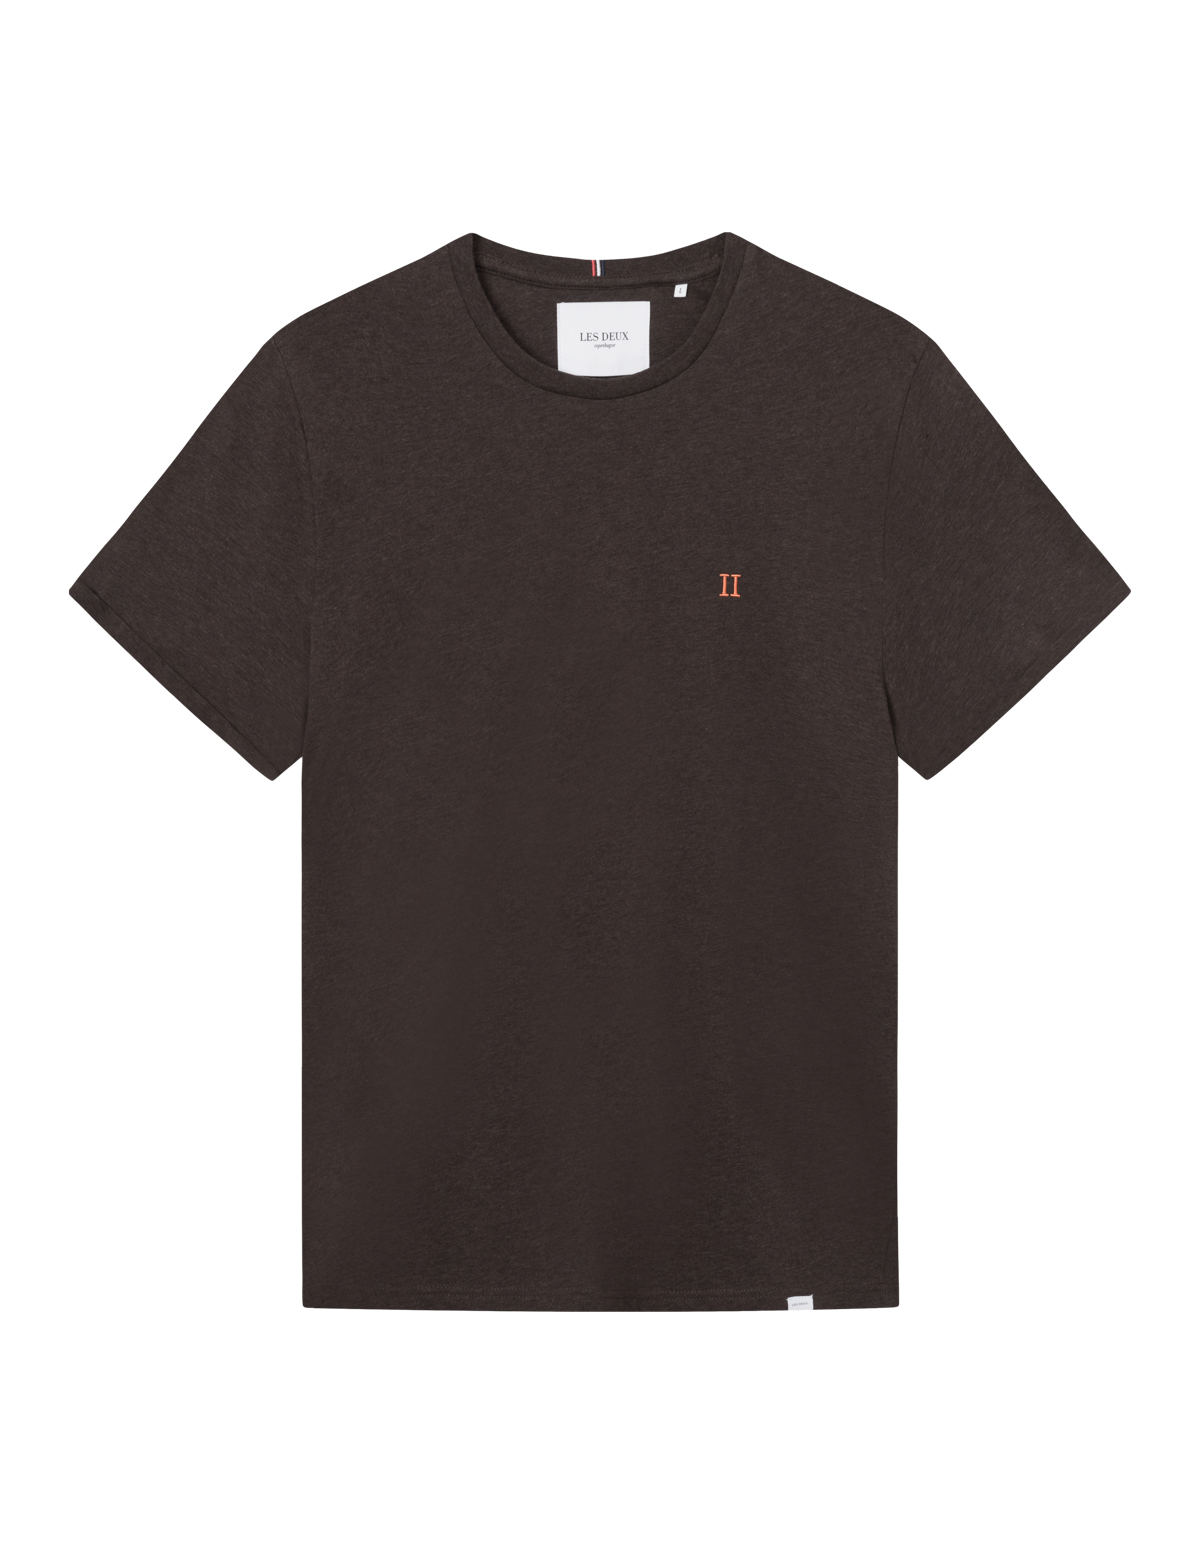 Nørregaard T-shirt, Coffee Brown Melagne/Orange, S